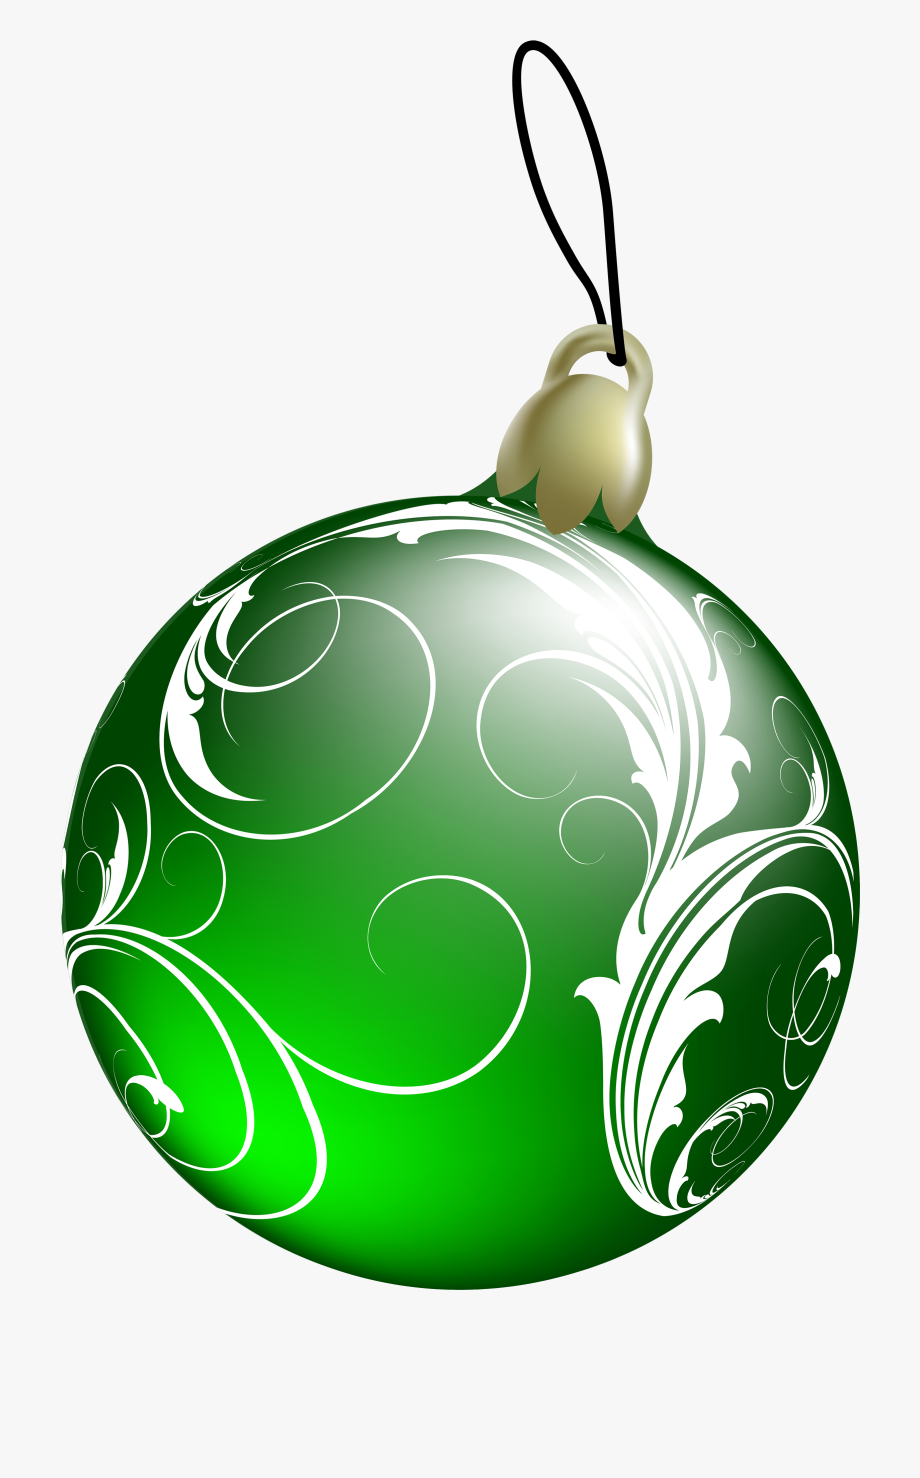 Ornament clipart holiday ornament, Ornament holiday ornament ...